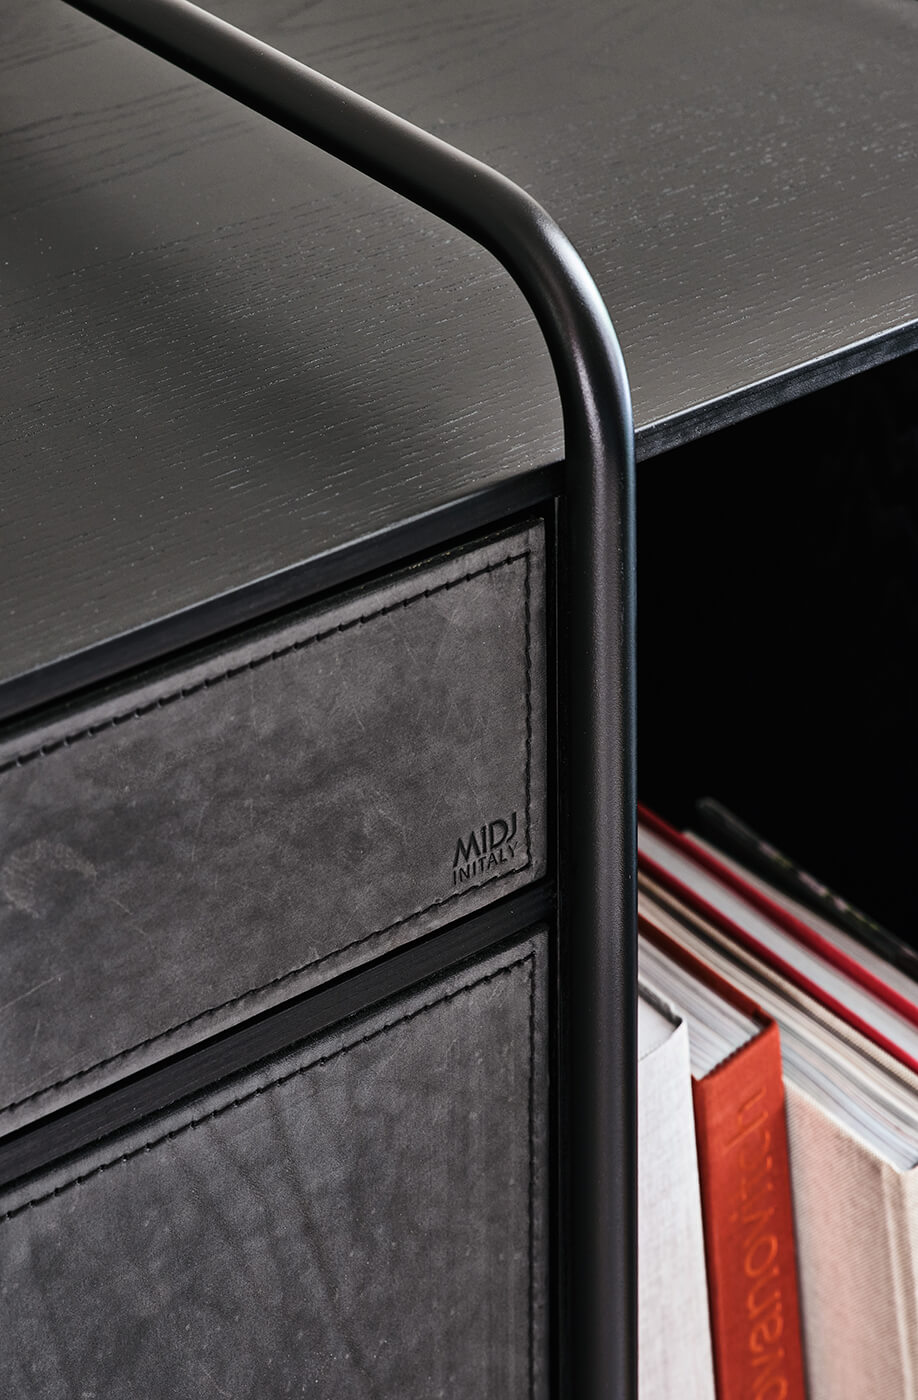 Apelle sideboard in black hide and wood designed by MIDJ